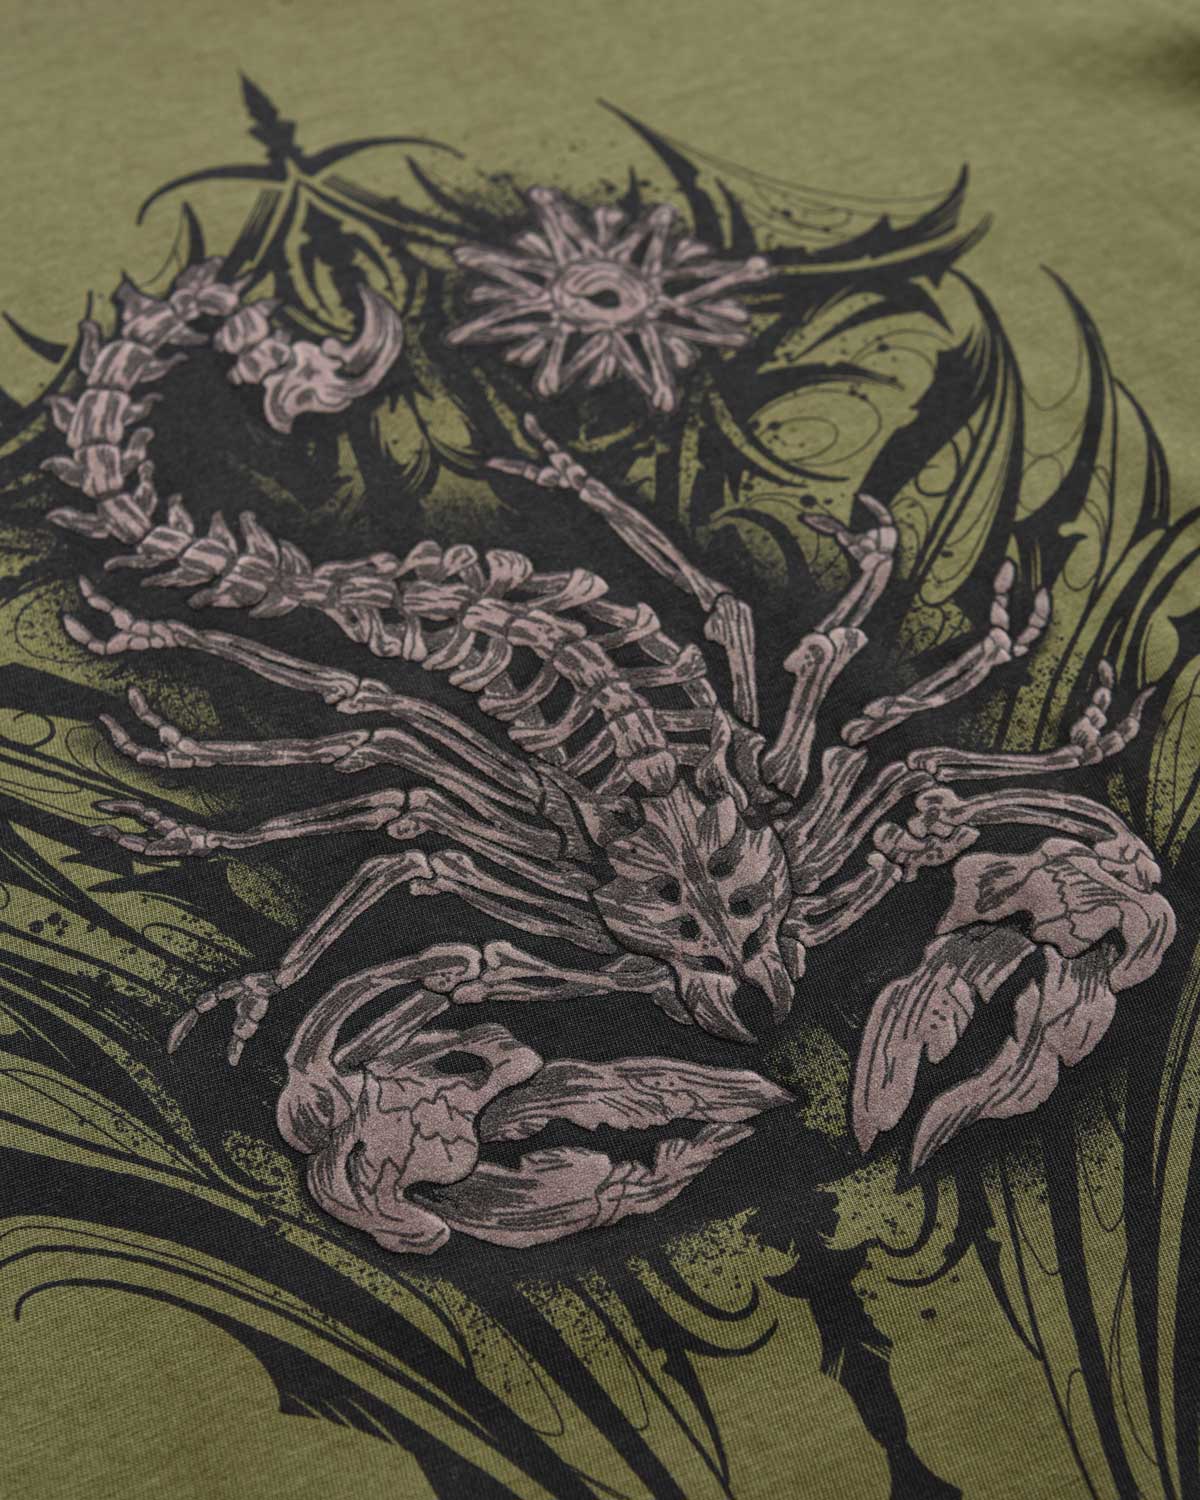 Man | Green "Tribal Scorpion" T-Shirt In 100% Cotton